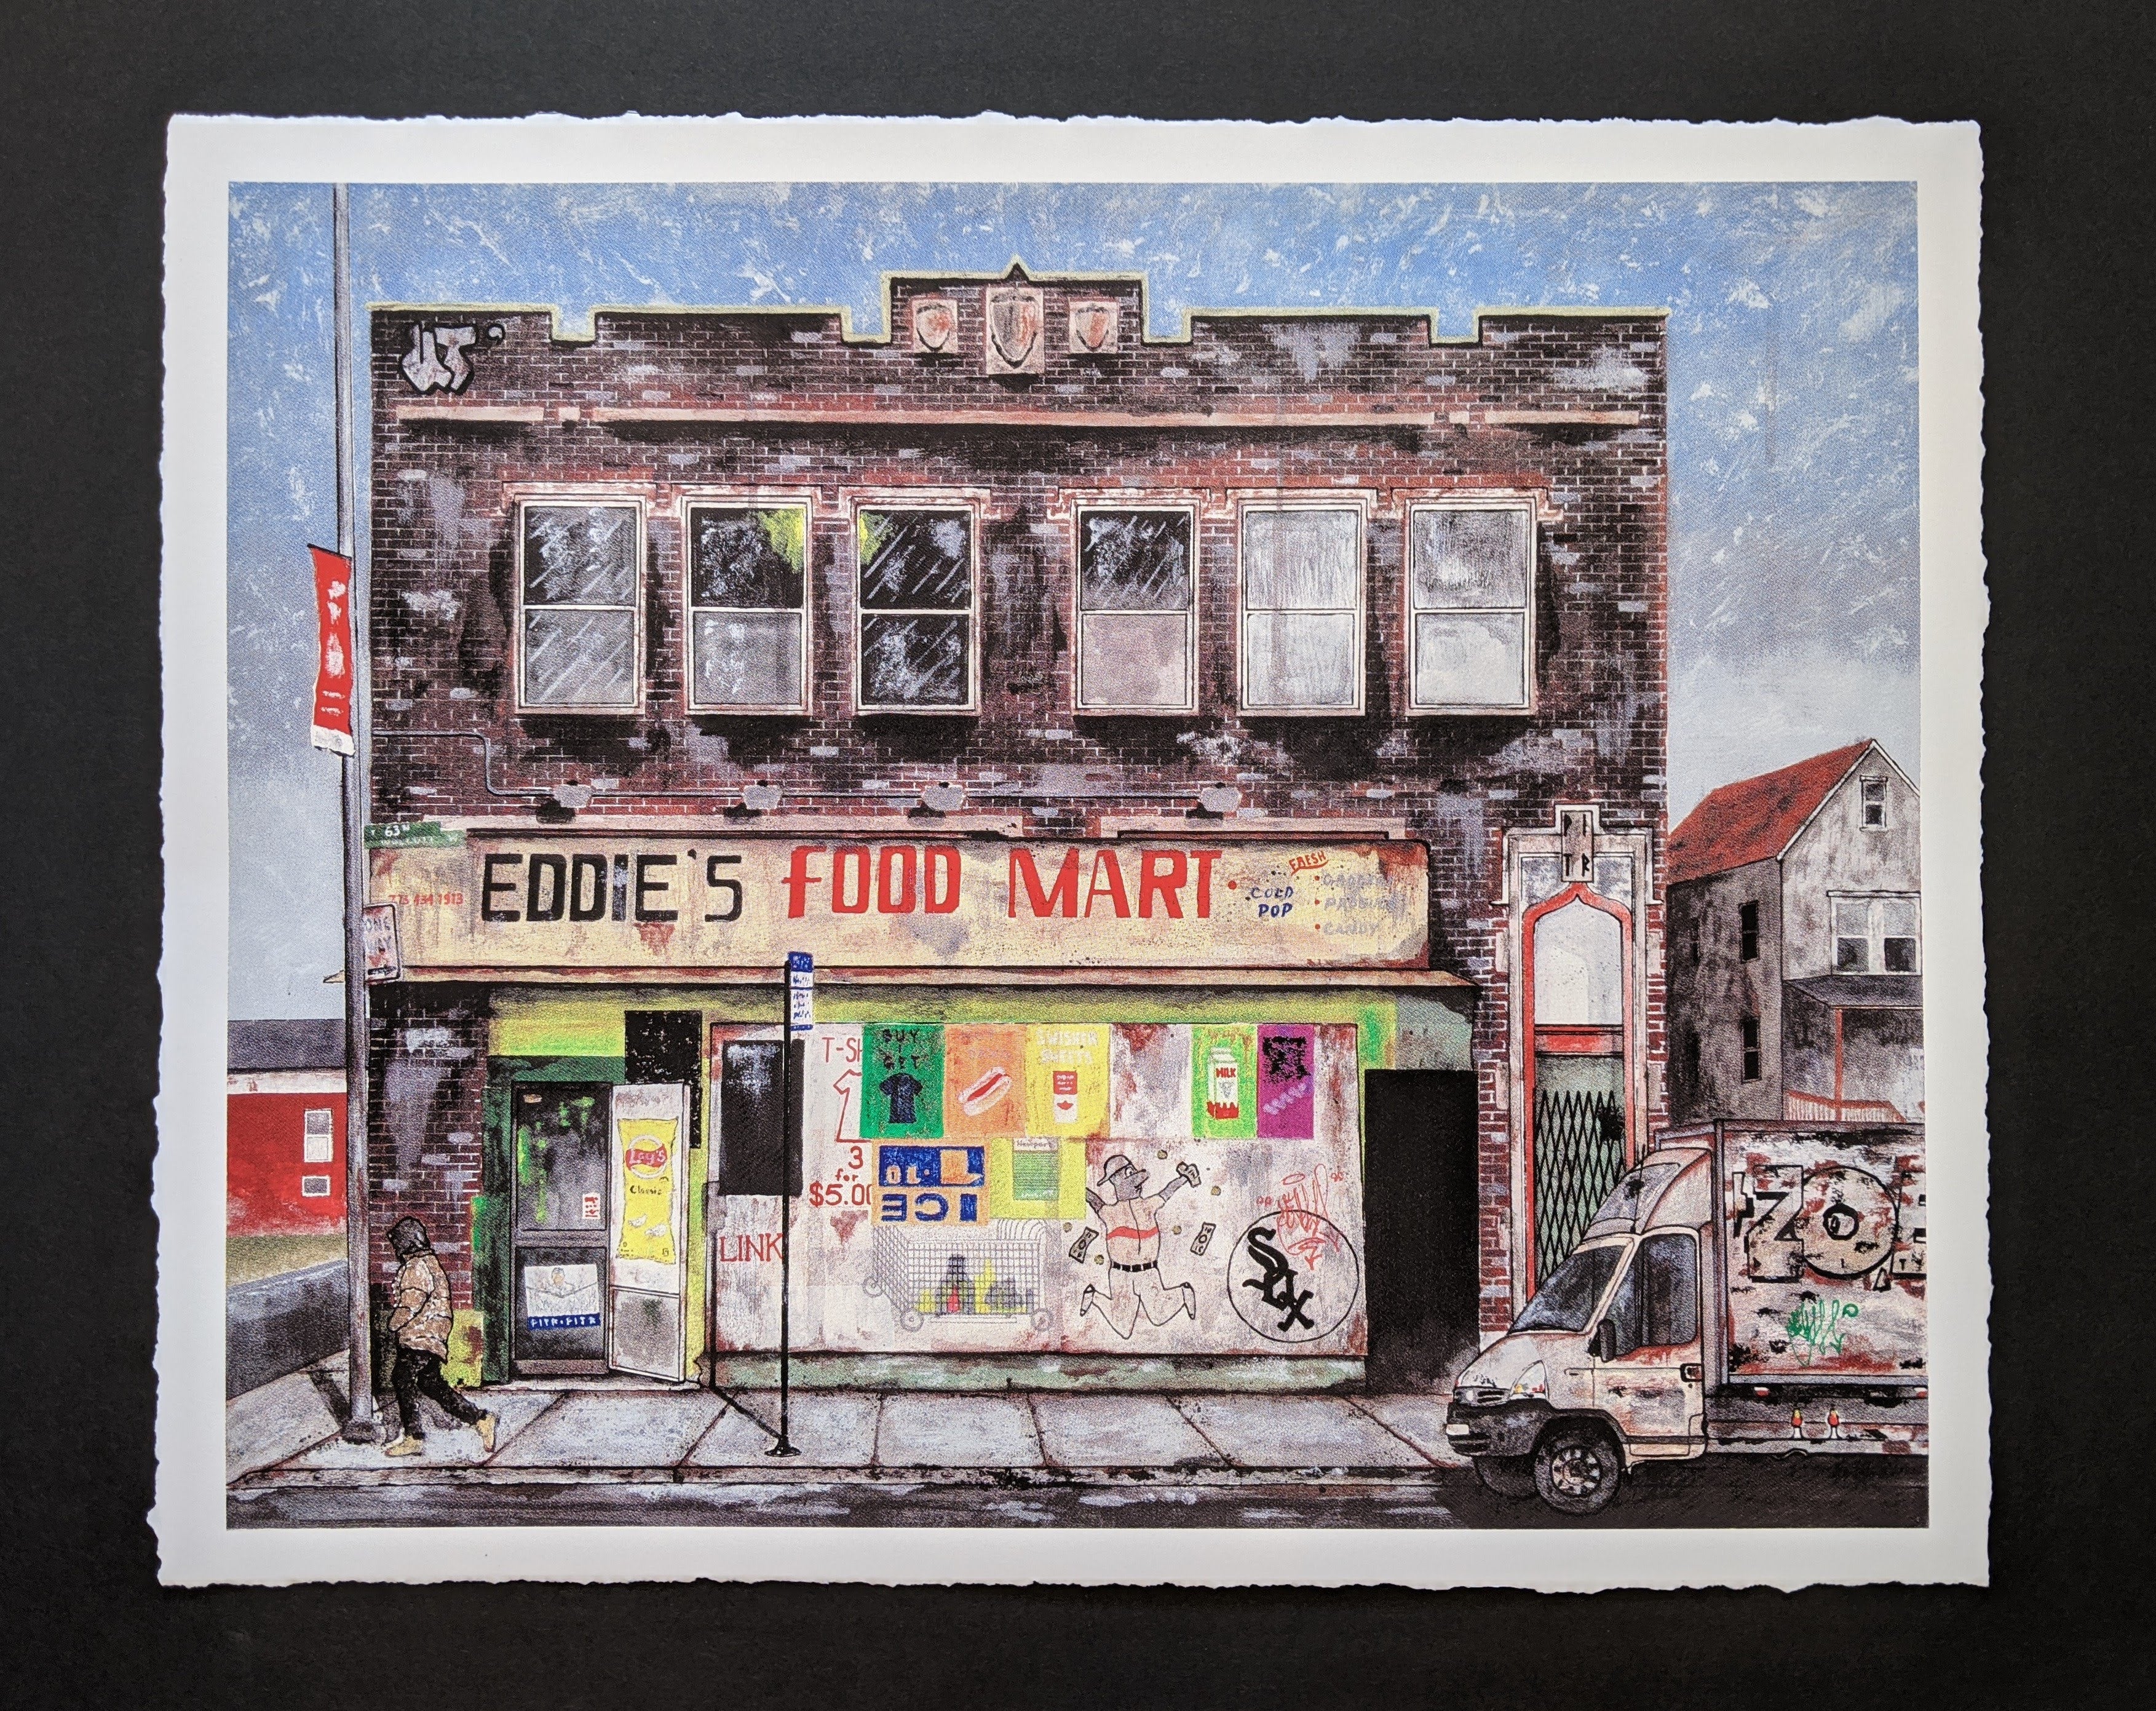 "Eddie's Food Mart" by PizzaInTheRain